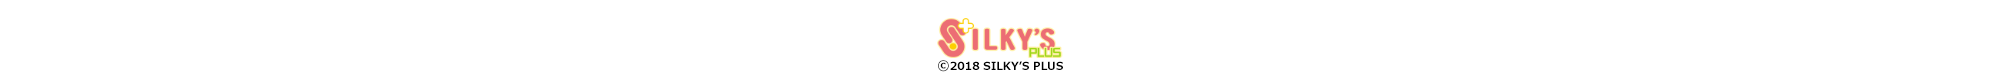 (c) 2018 SILKY'S PLUS